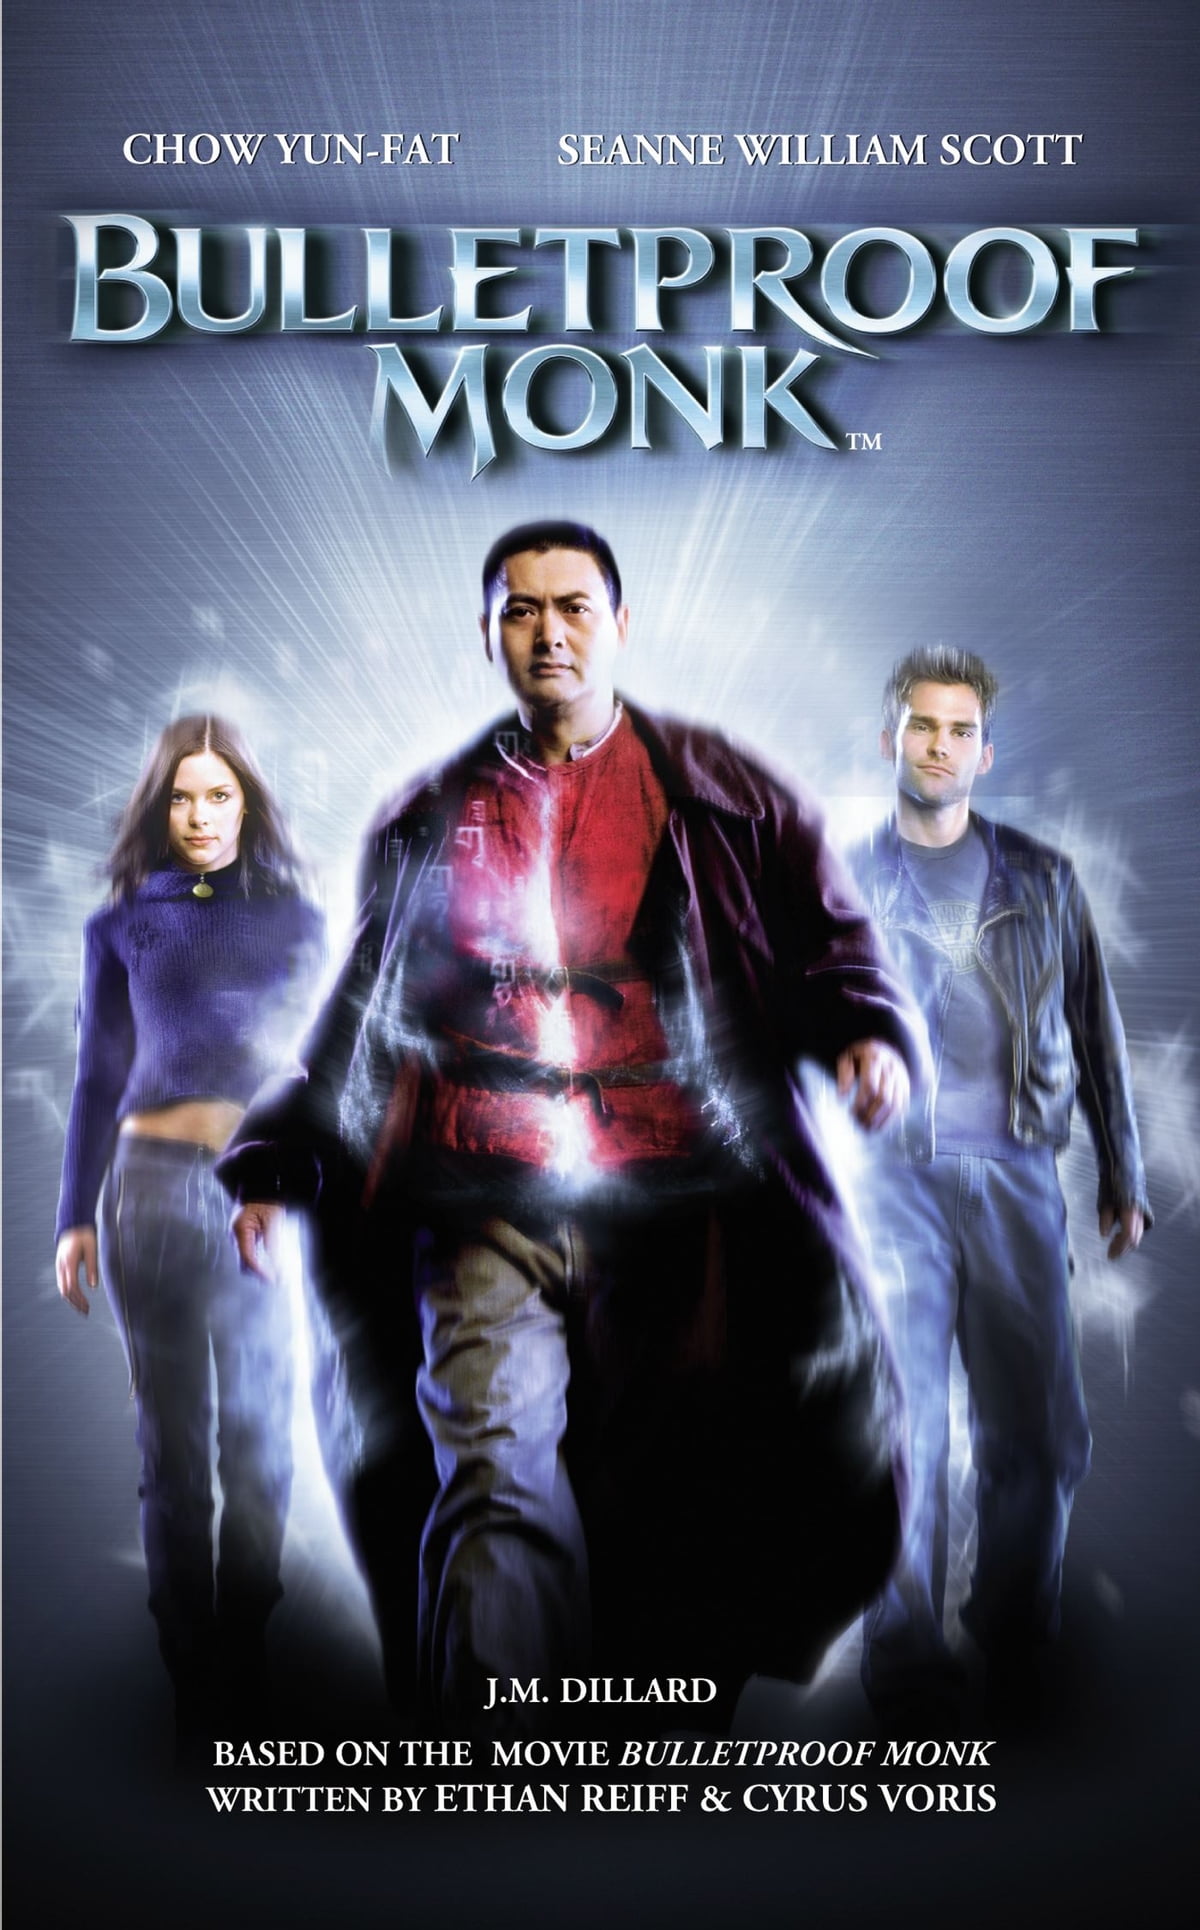 Kurşun Geçirmez - Bulletproof Monk (2003) 1080p.Brrip.Tr-En Dual 1rs2xt7